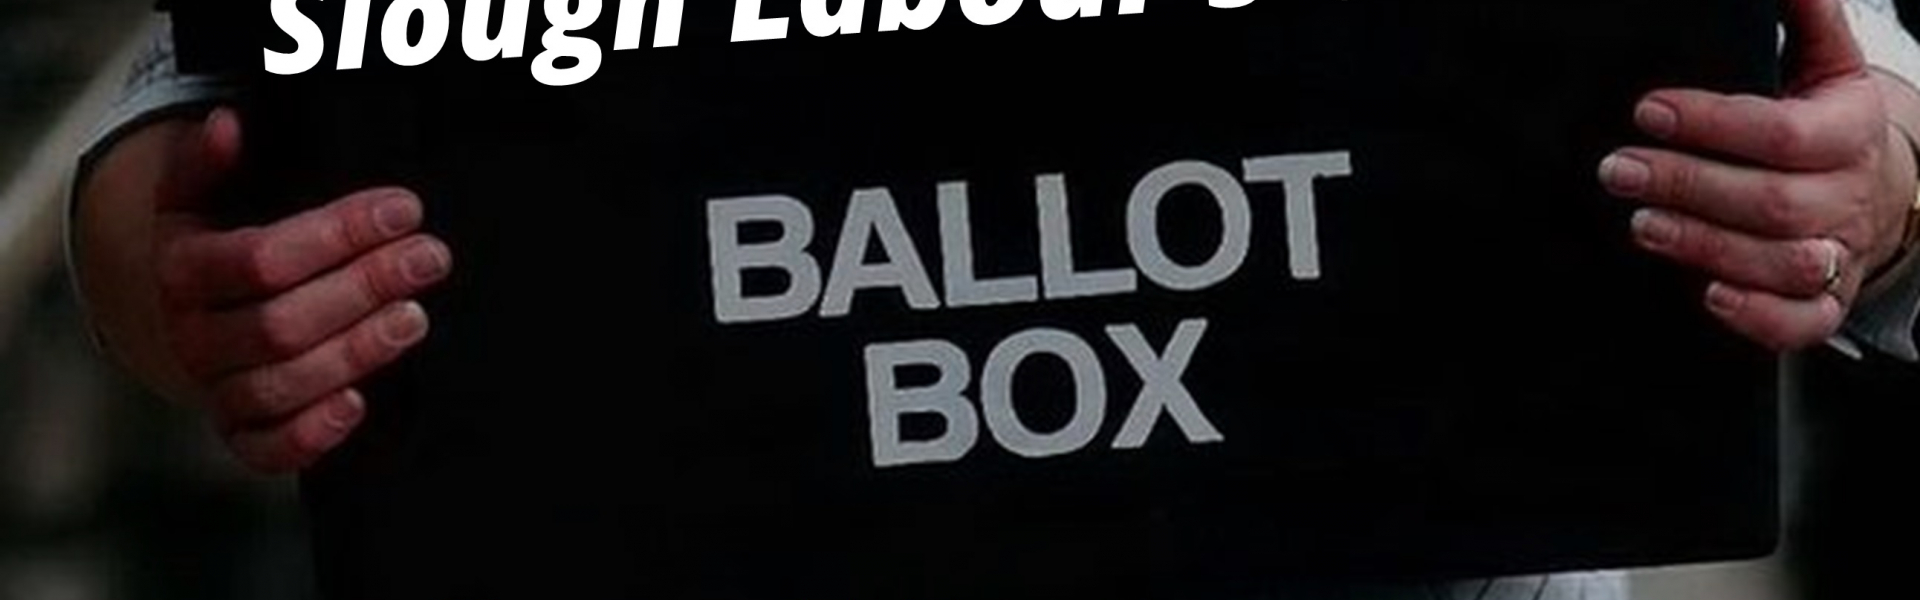 Slough Labour Voter ID U-Turn